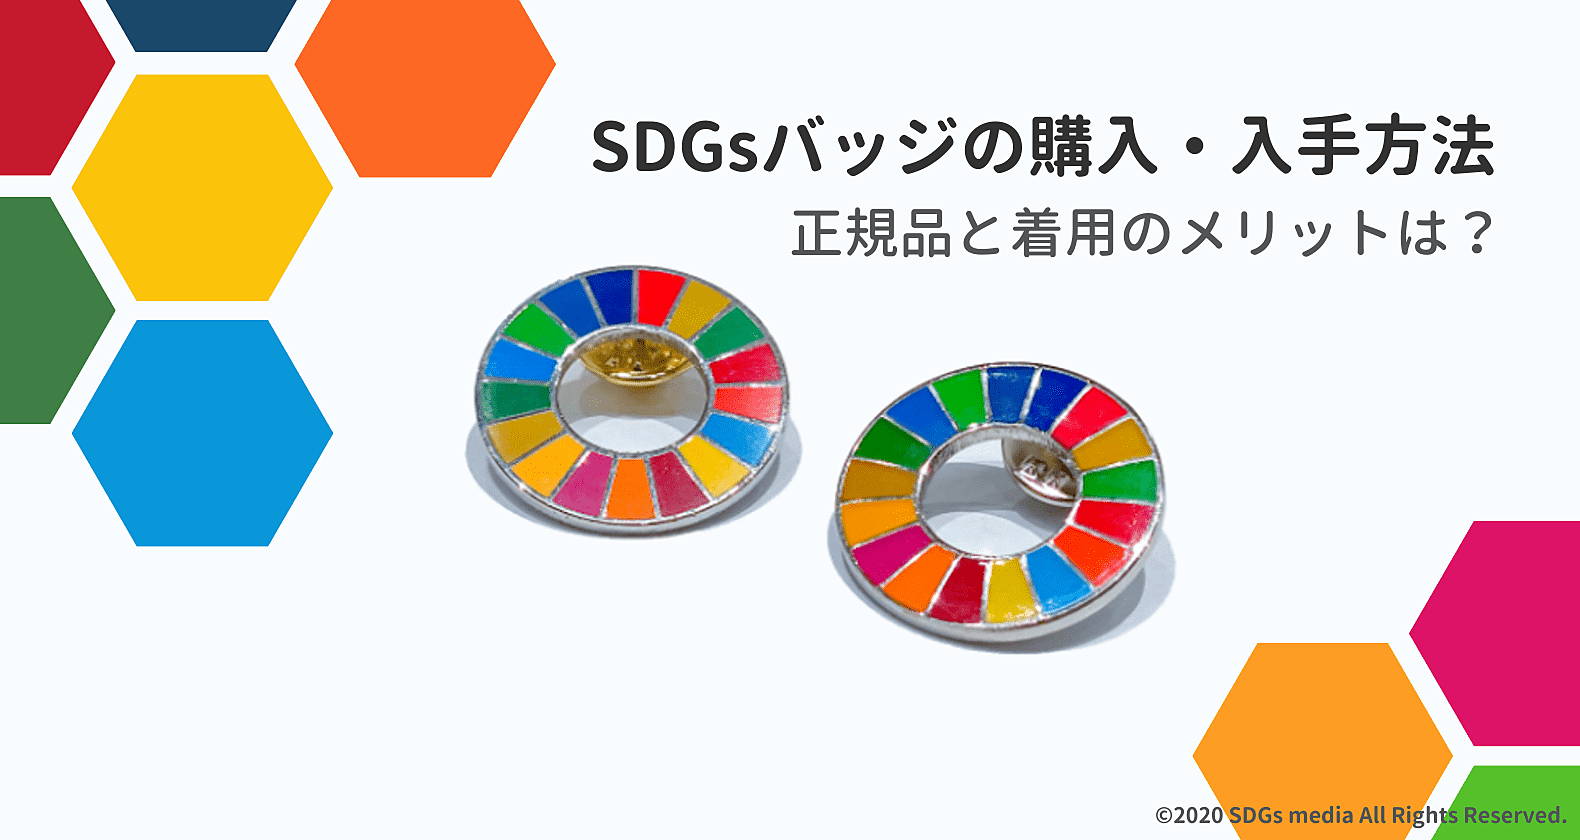 SDGsバッジの購入方法｜つける意味と正規品の見分け方を解説の画像